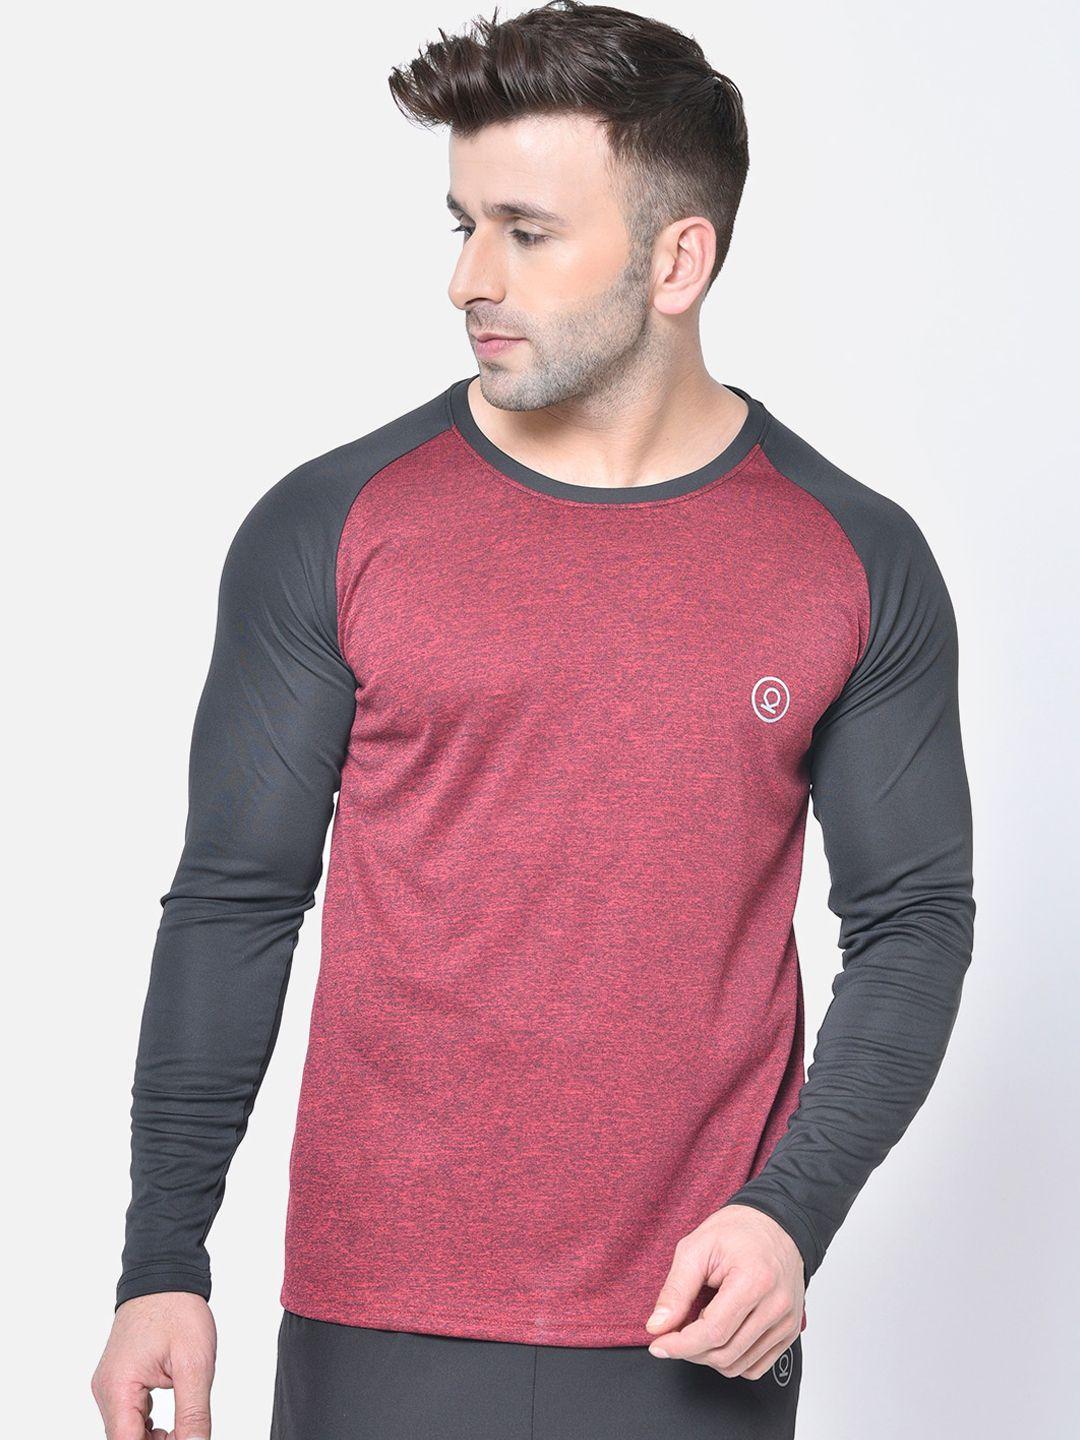 chkokko-men-maroon-colourblocked-round-neck-gym-t--shirt